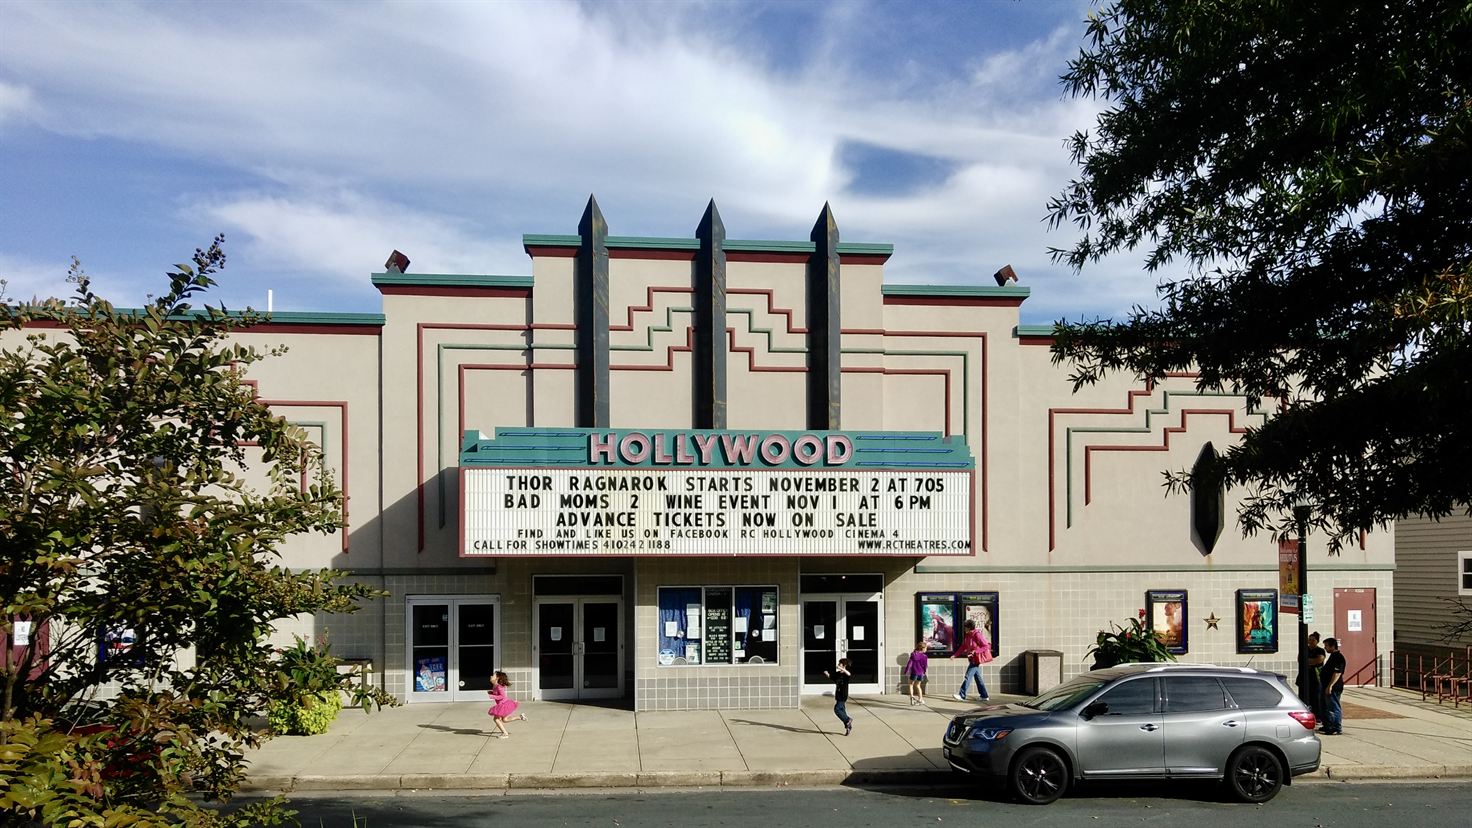 R/C Hollywood Cinema 4 | Arbutus, MD